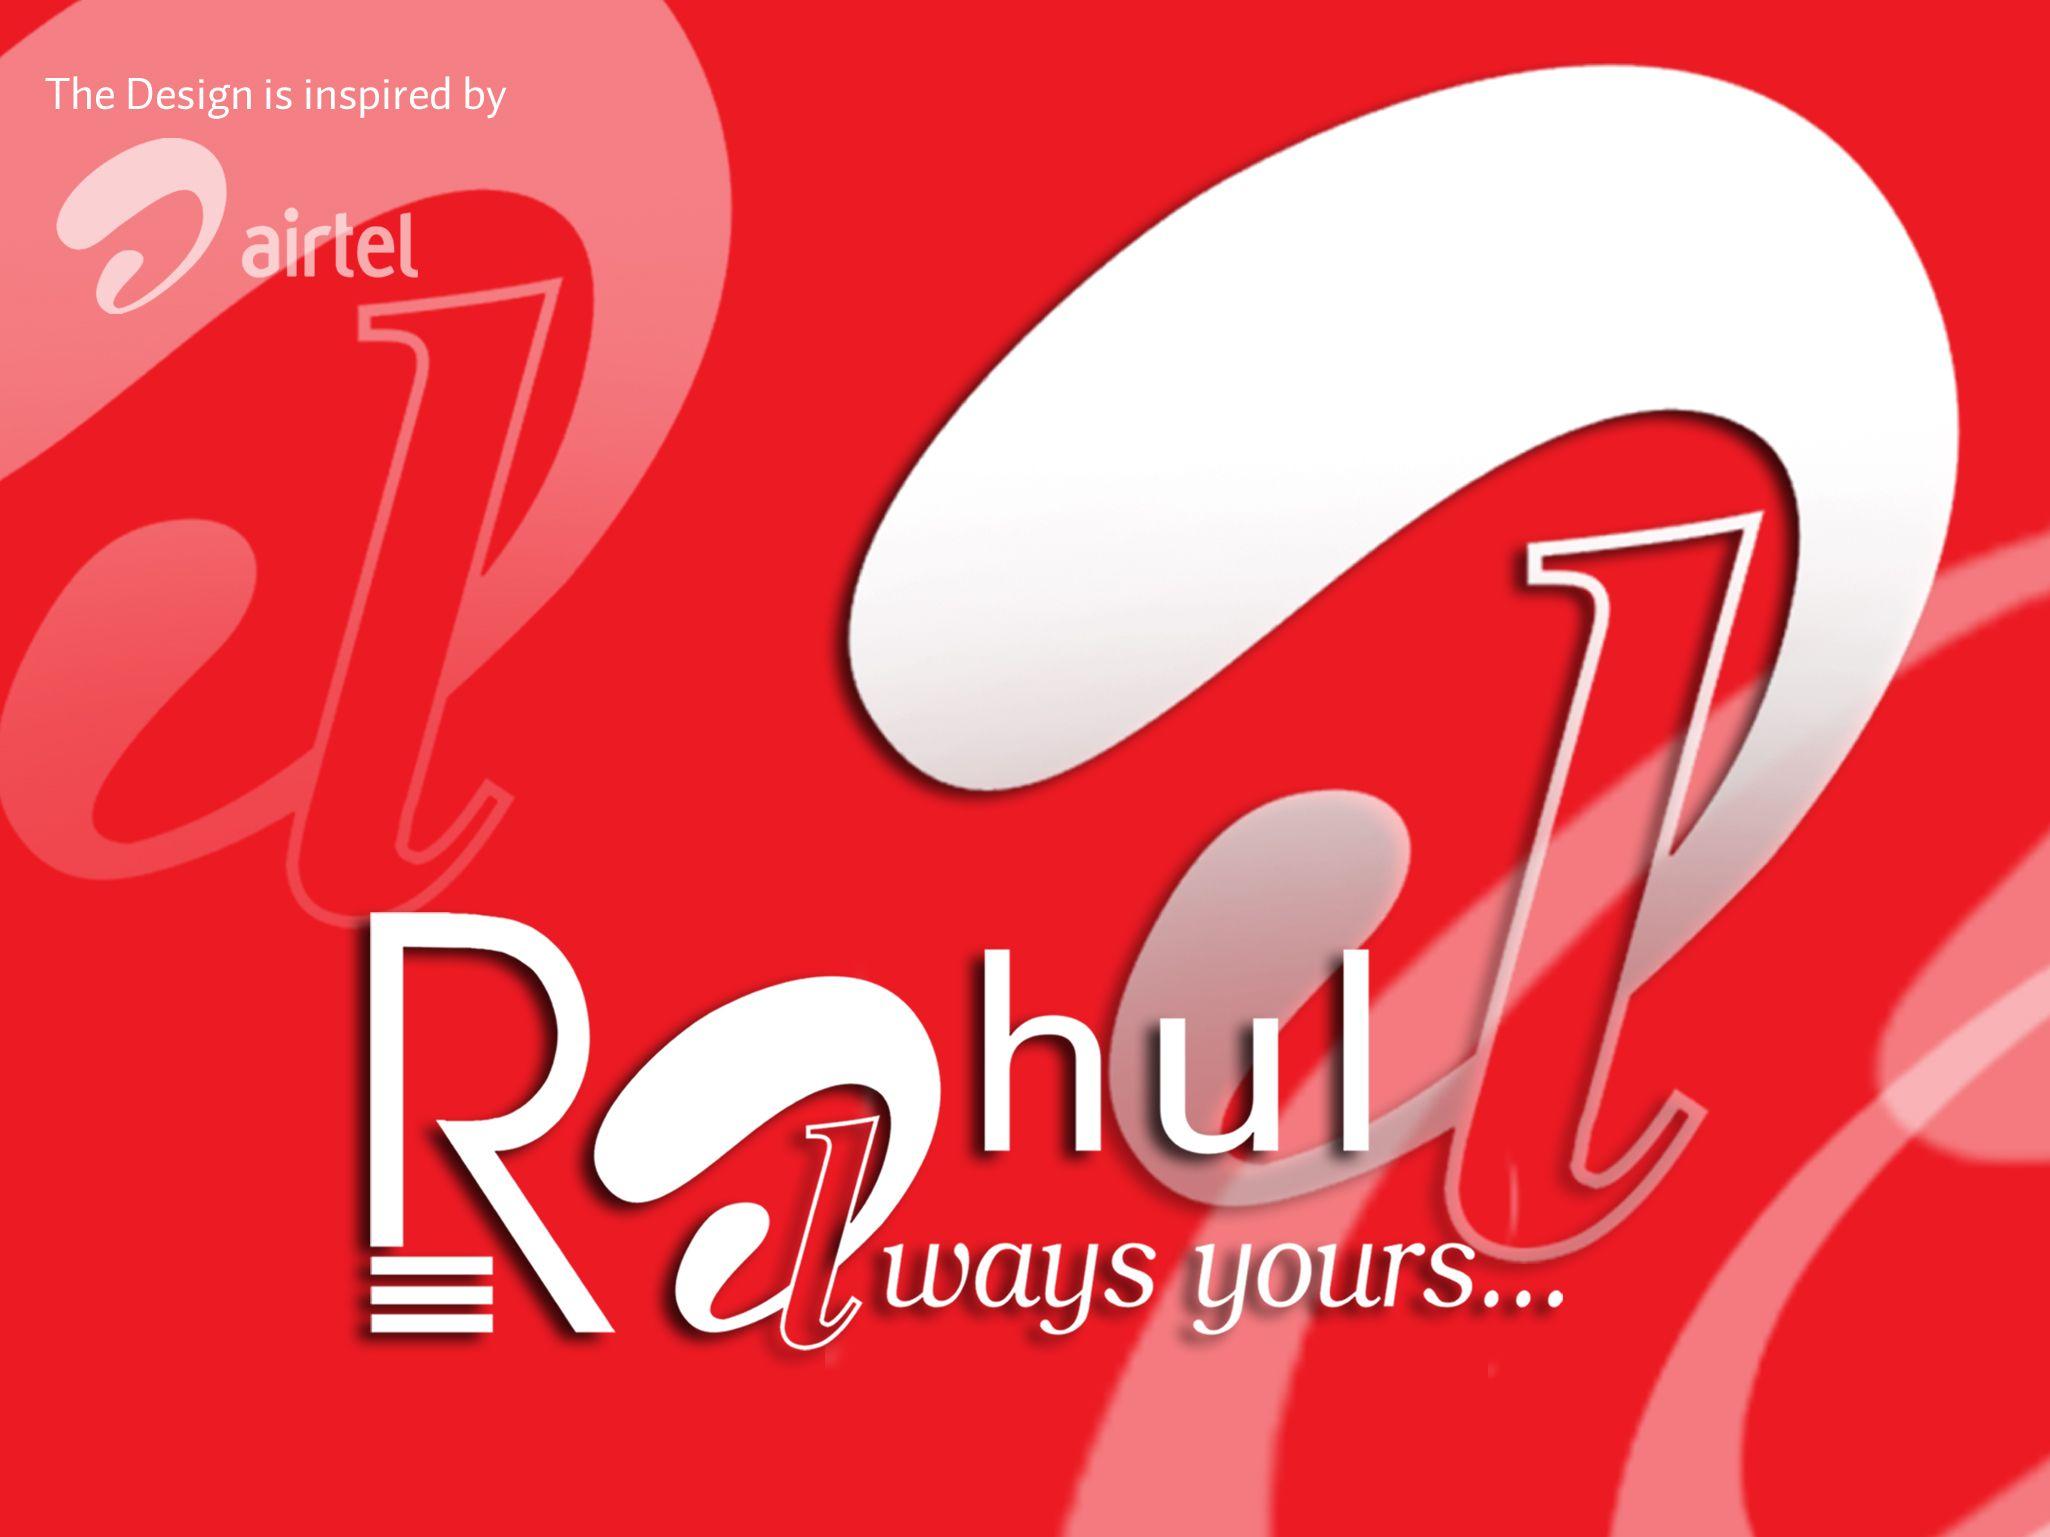 Airtel Logo - Rahul Kesharwani Alway Yours in Airtel Logo Style. My Some Own